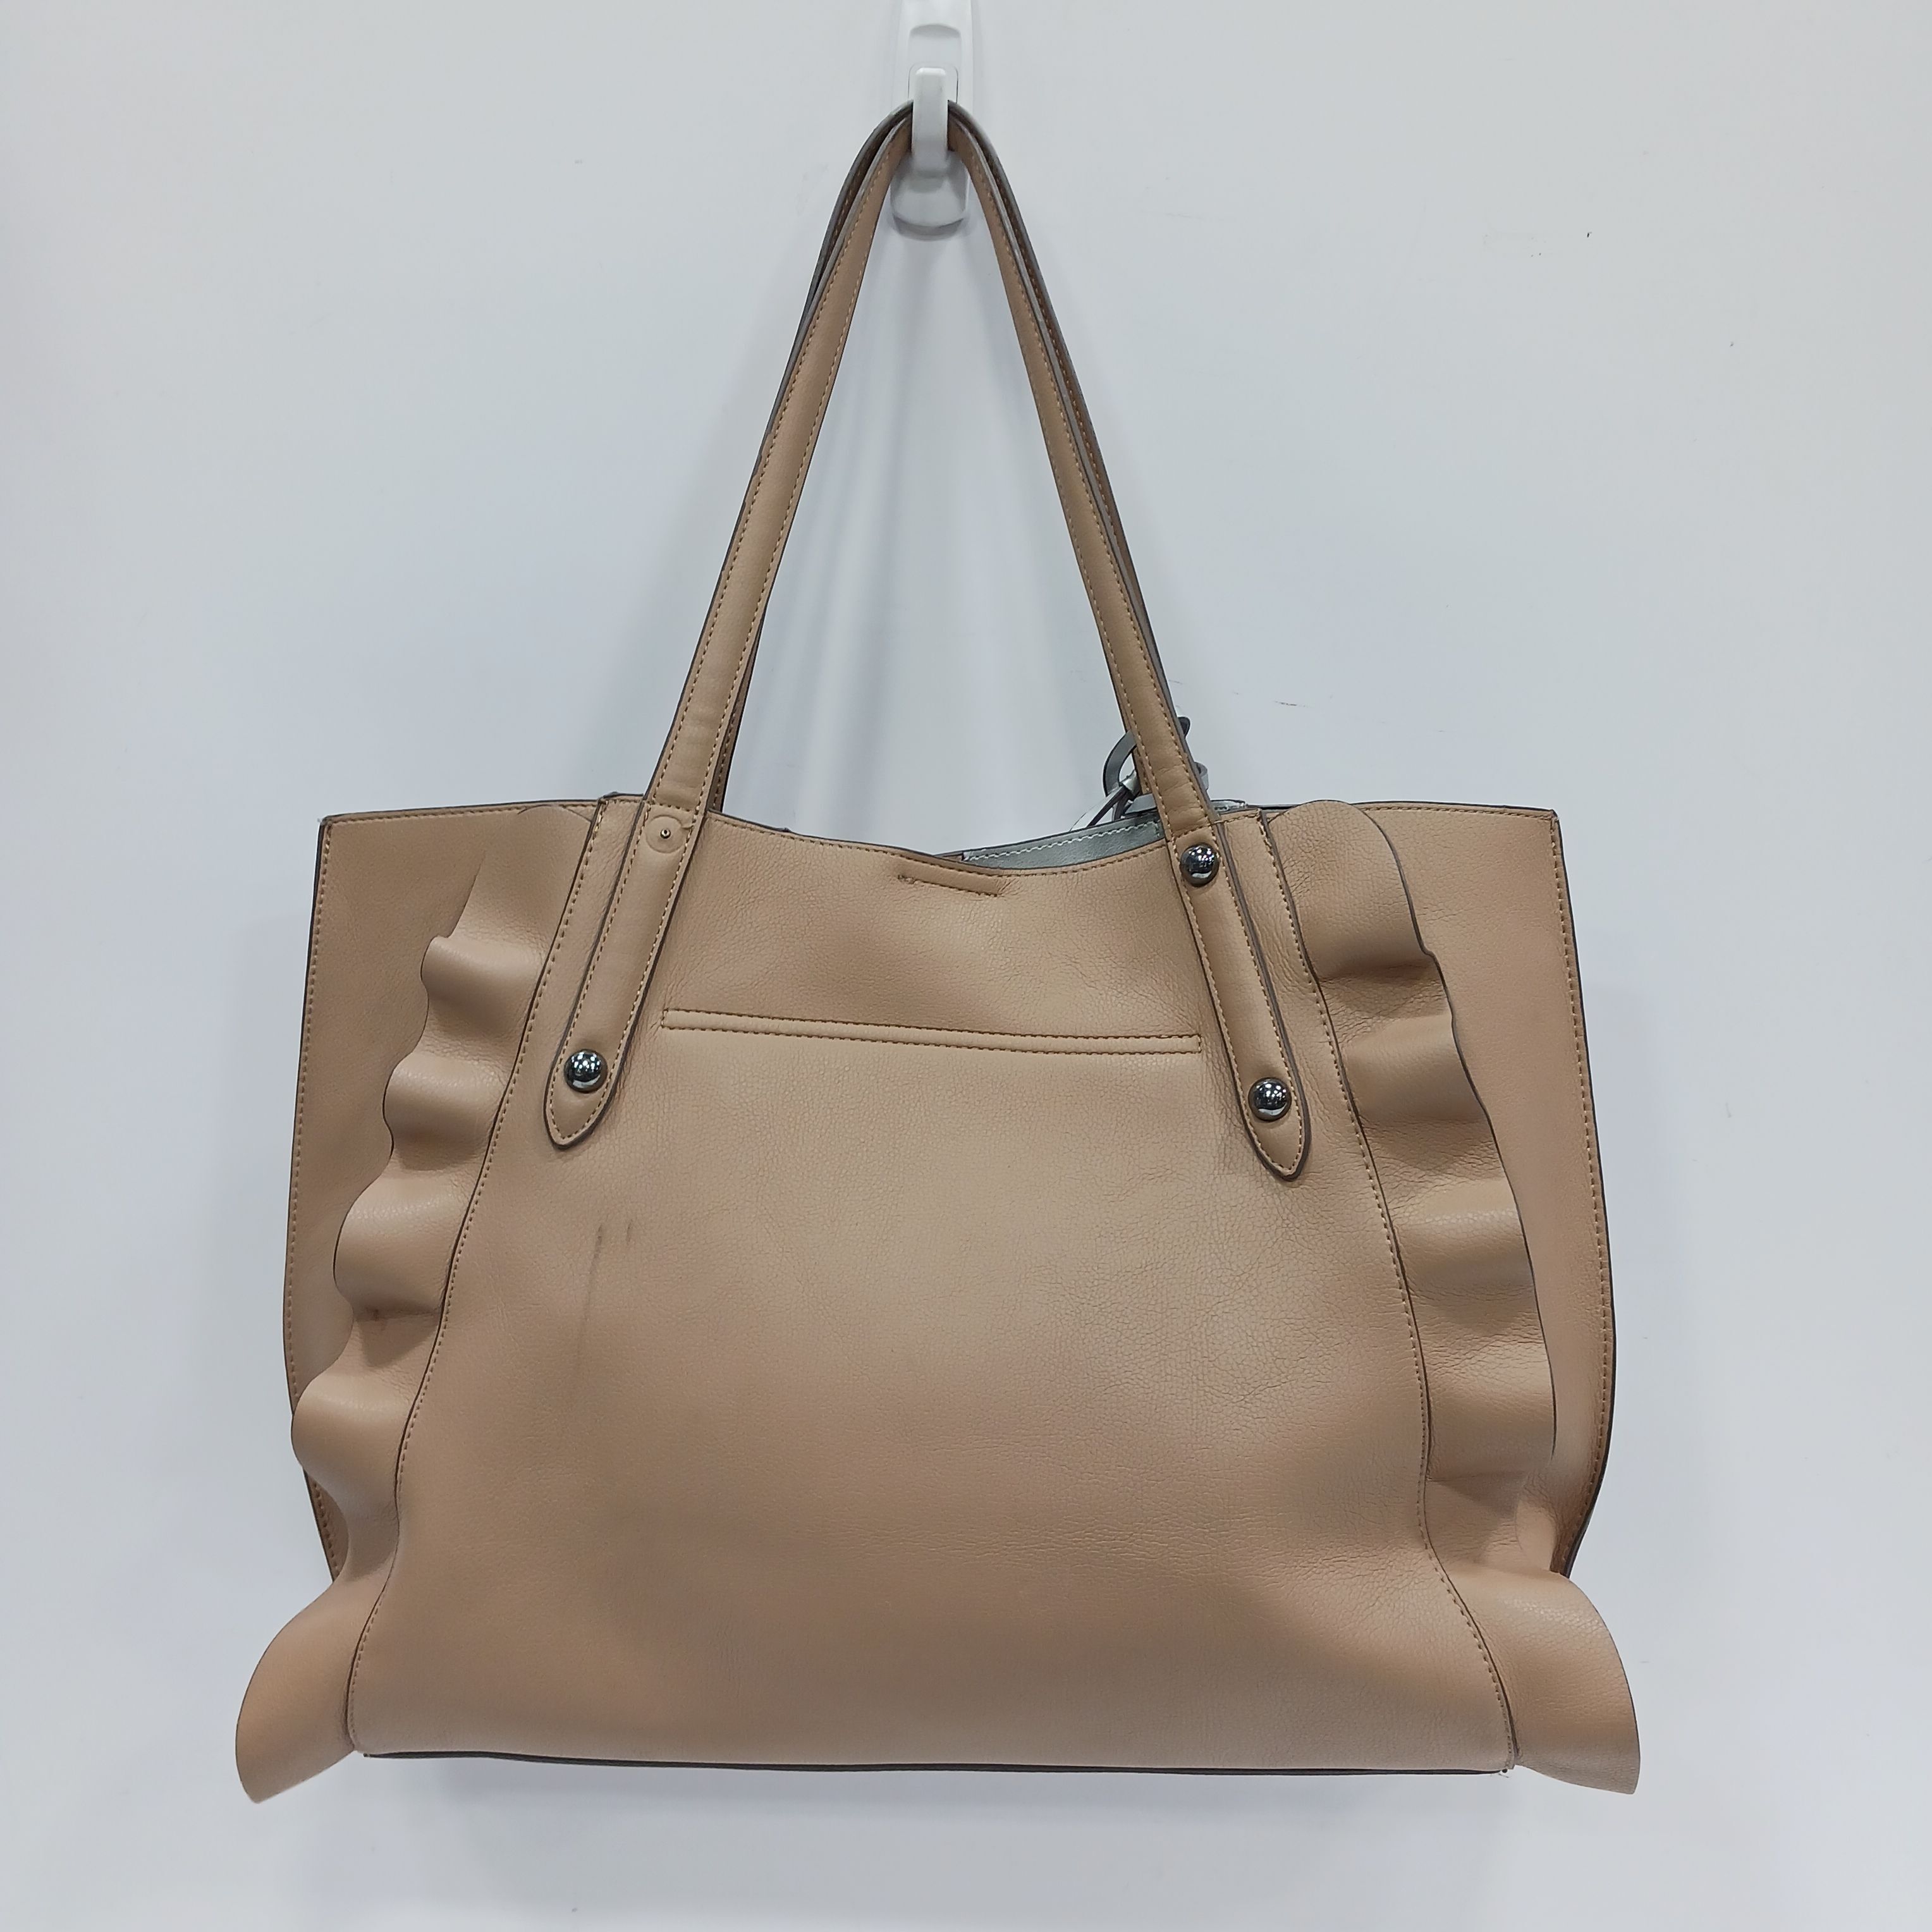 Jessica Simpson Handbags | Groupon Goods